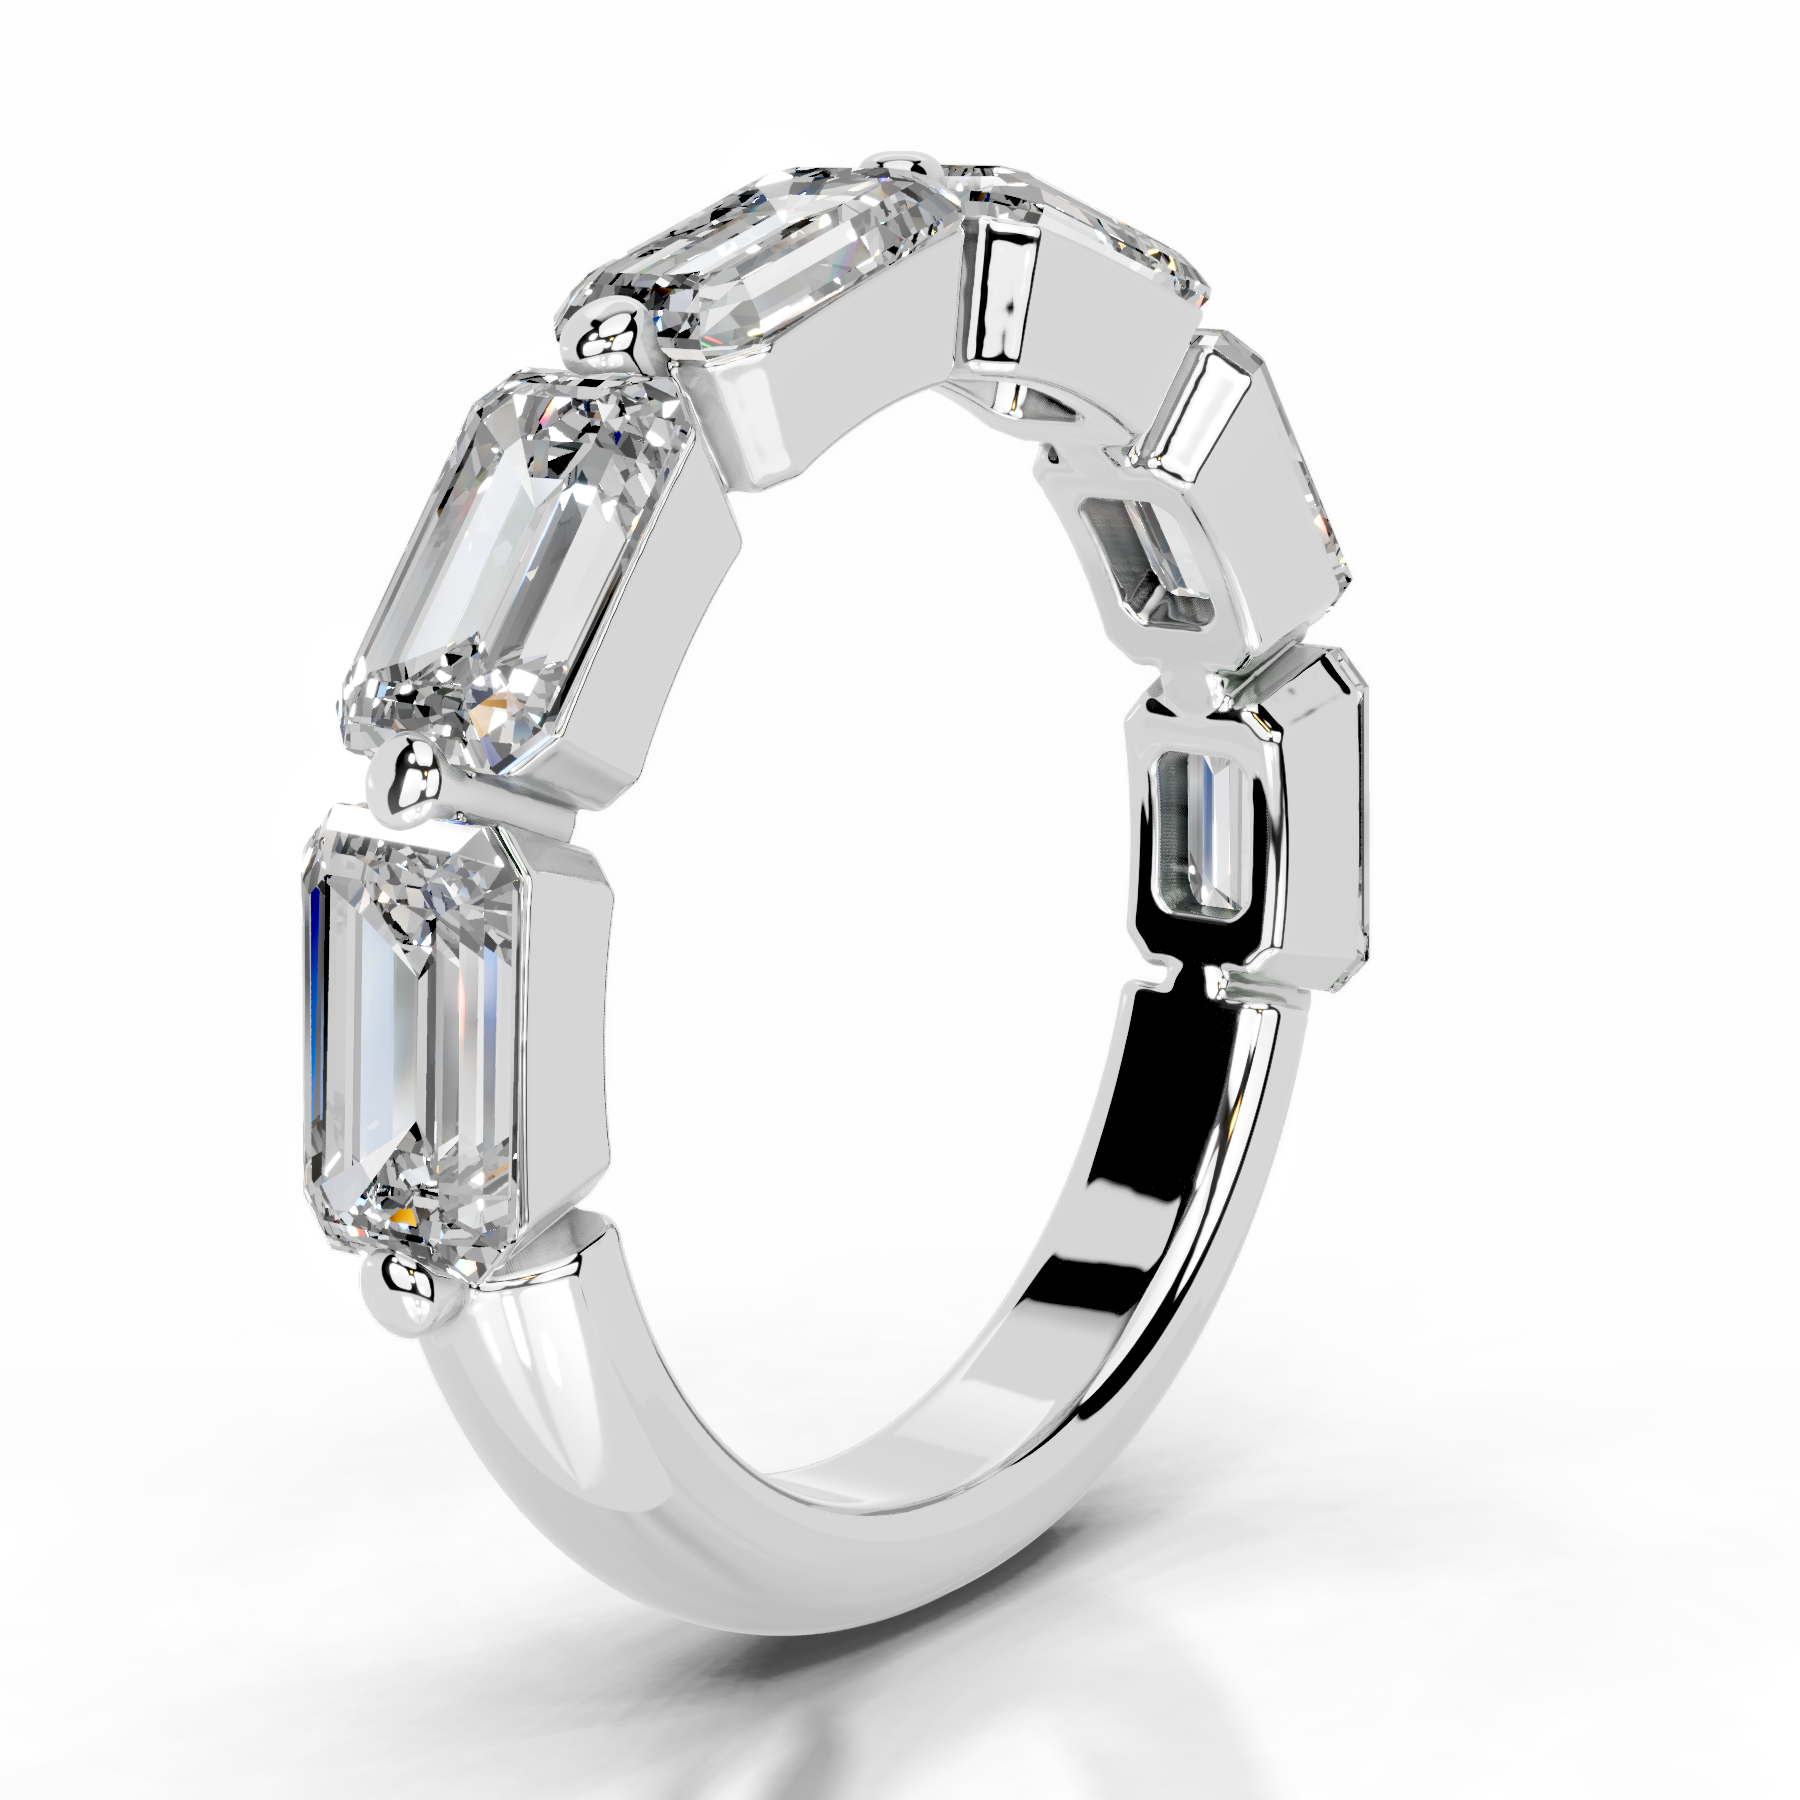 Quisha Diamond Wedding Ring   (2 Carat) -14K White Gold